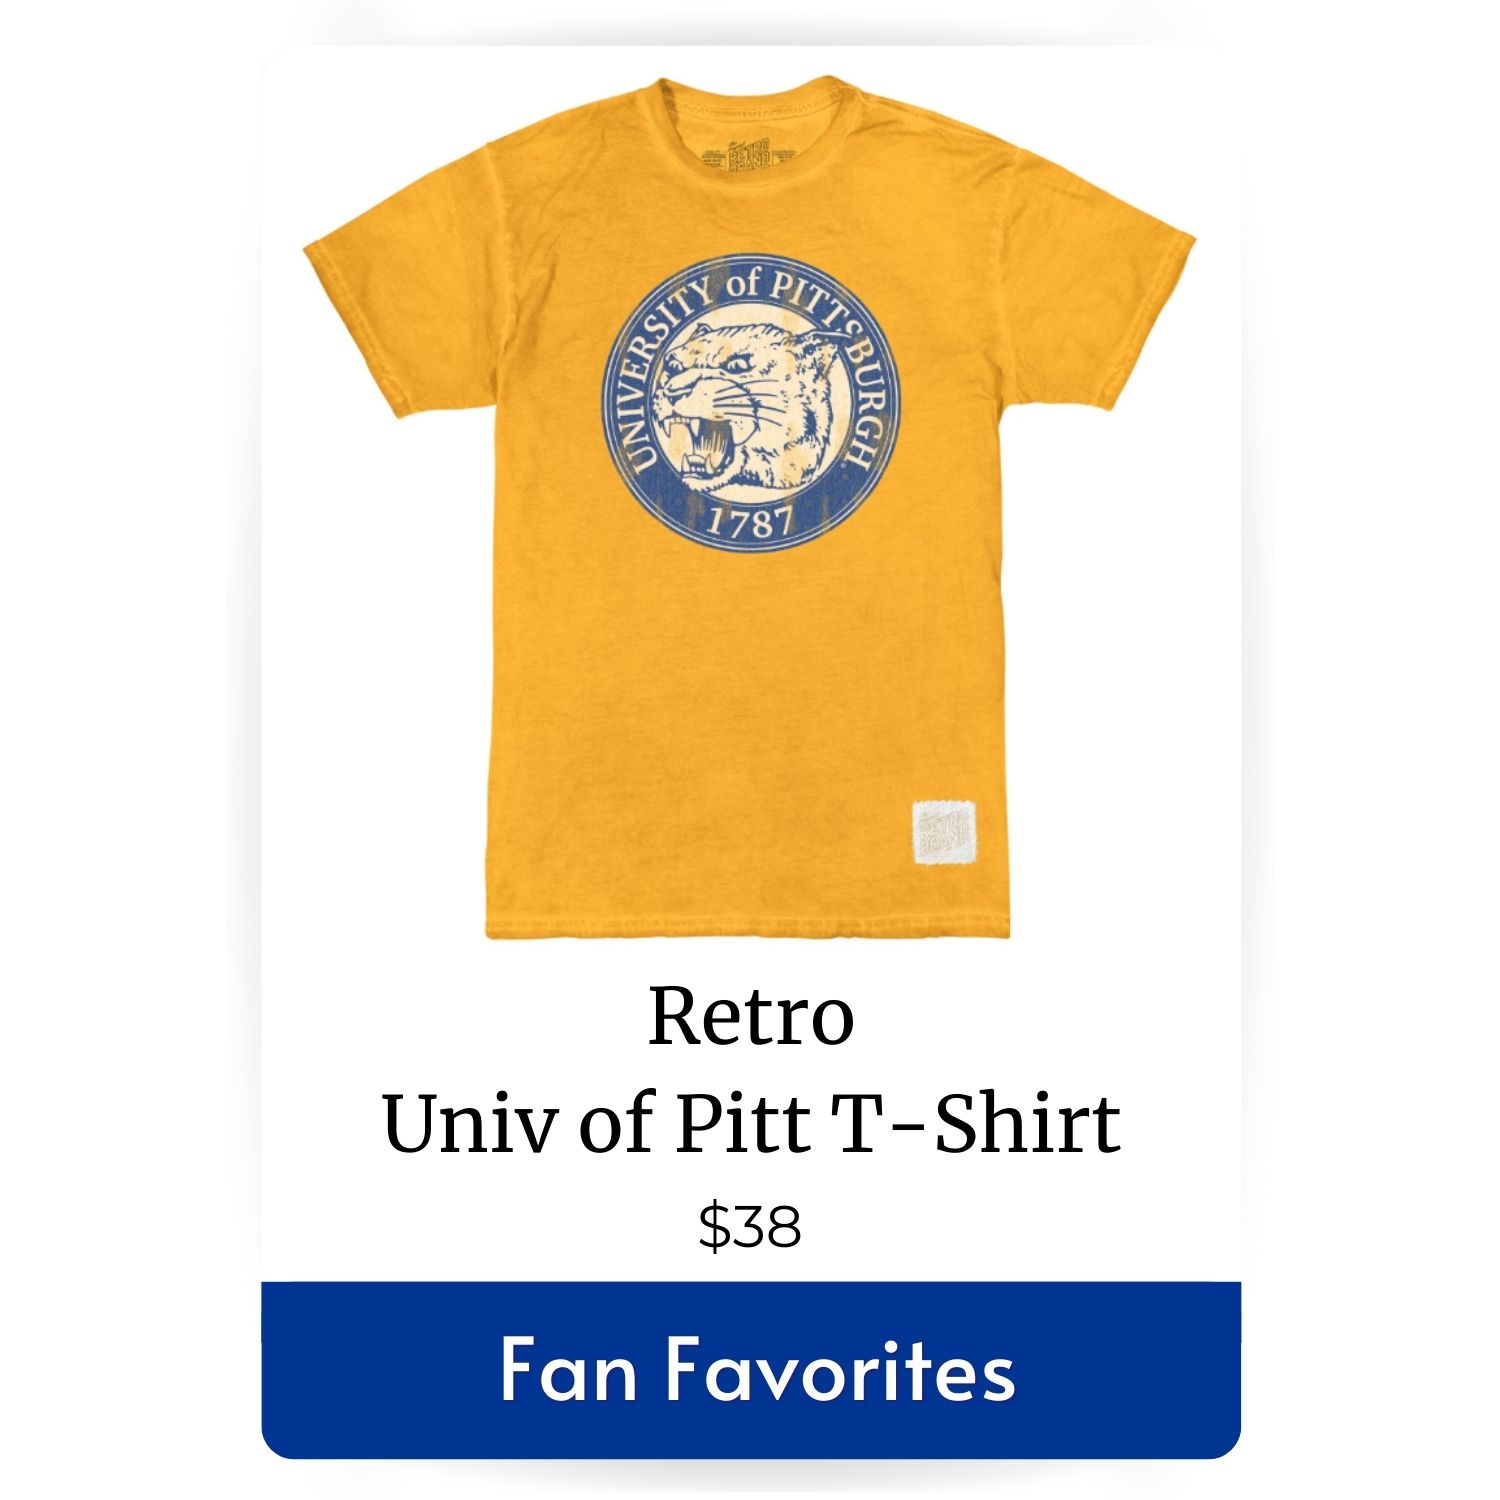 featured product fan favorite Retro University of Pitt Vintage T-Shirt 38 dollars